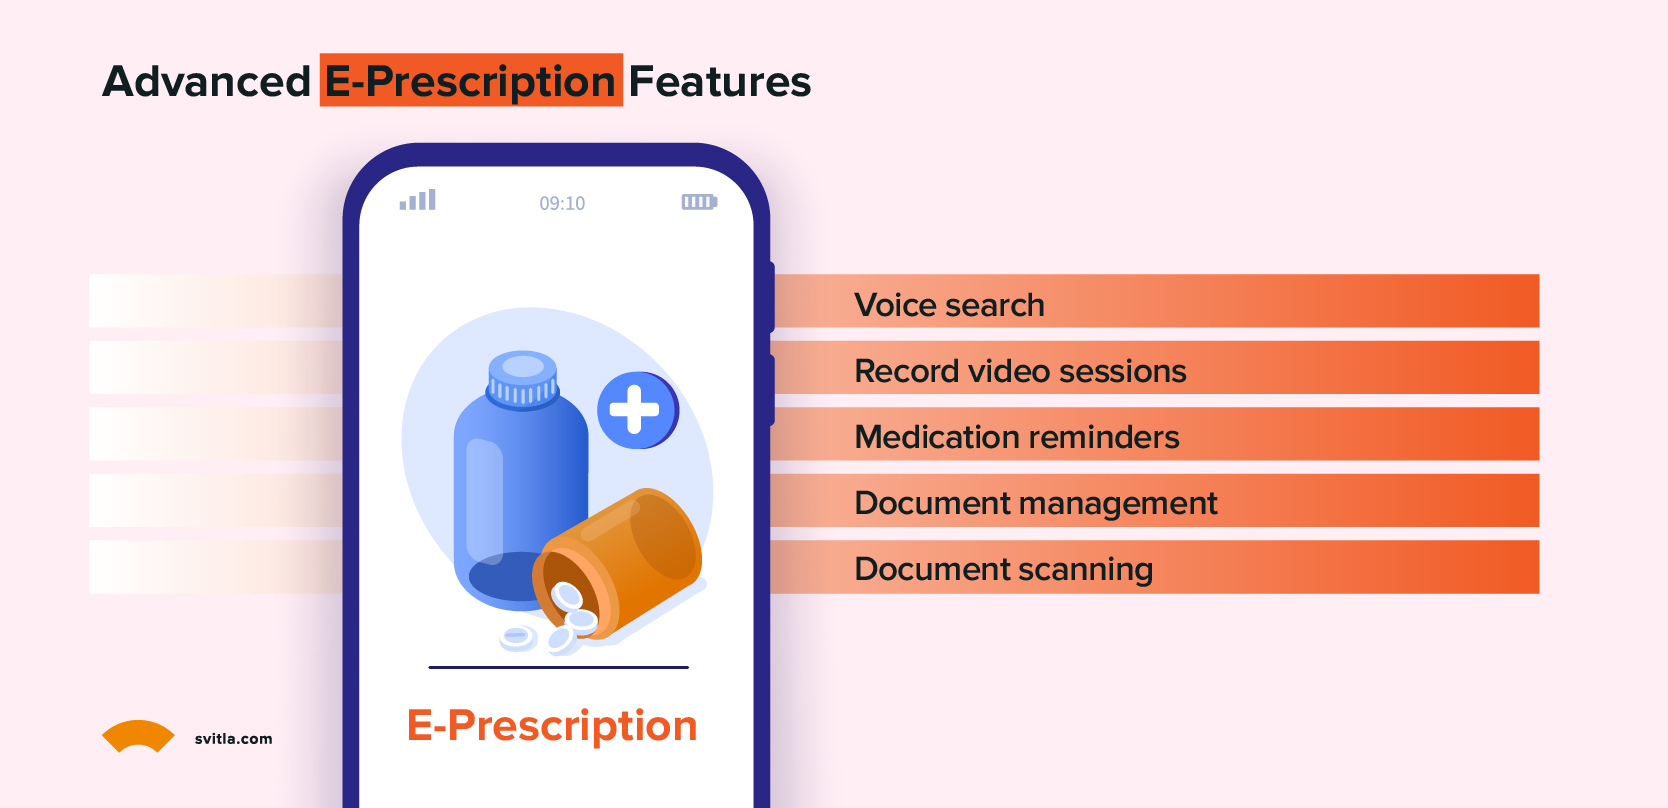 Advanced features for e-prescription apps